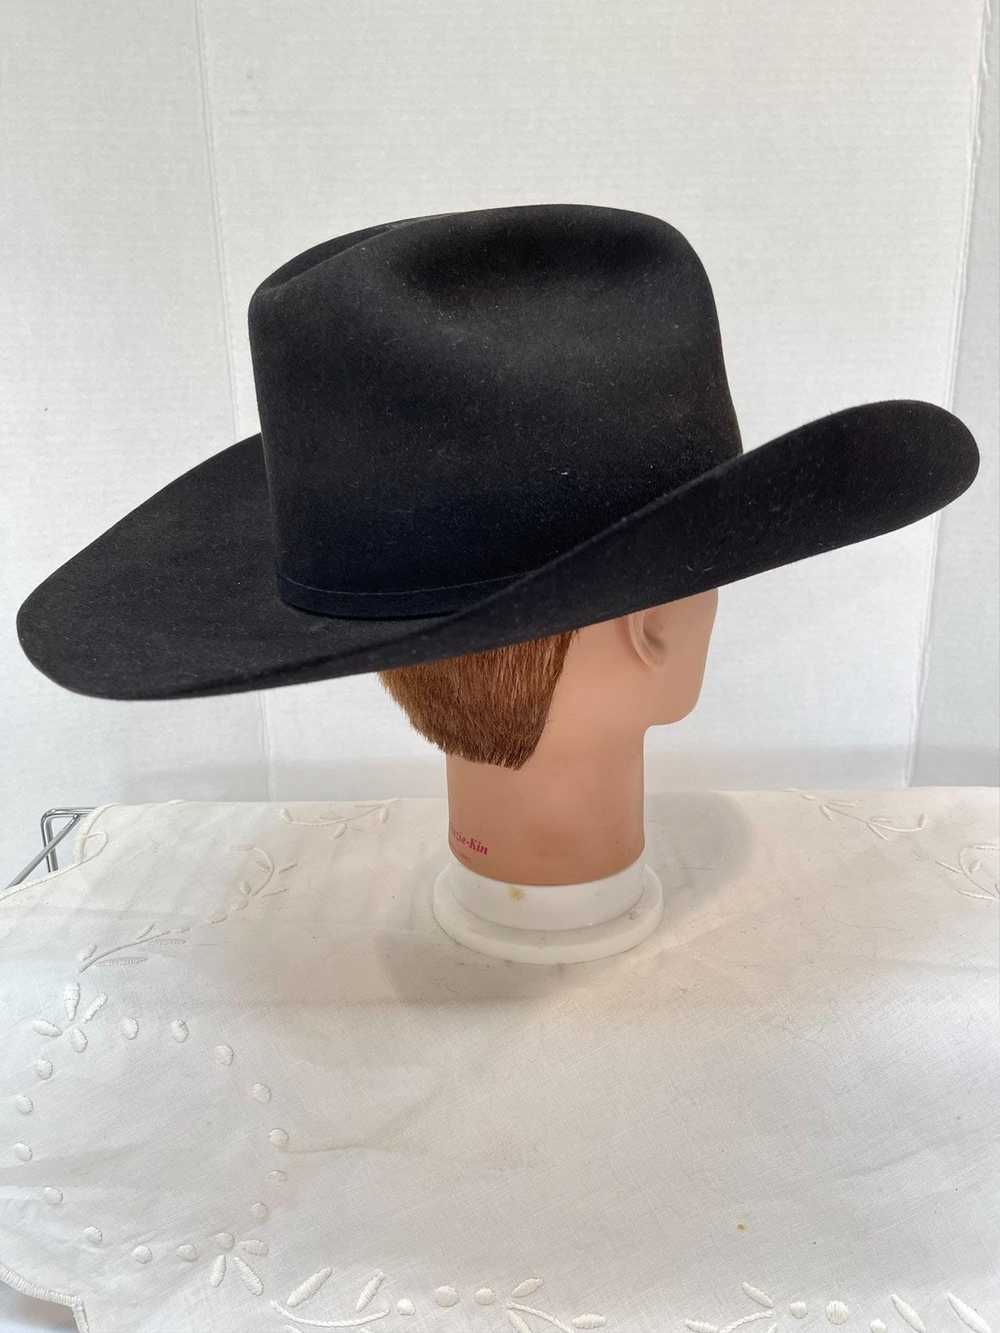 Bailey Bailey’s Men’s 8X Black Felt Fur Cowboy Hat - image 5